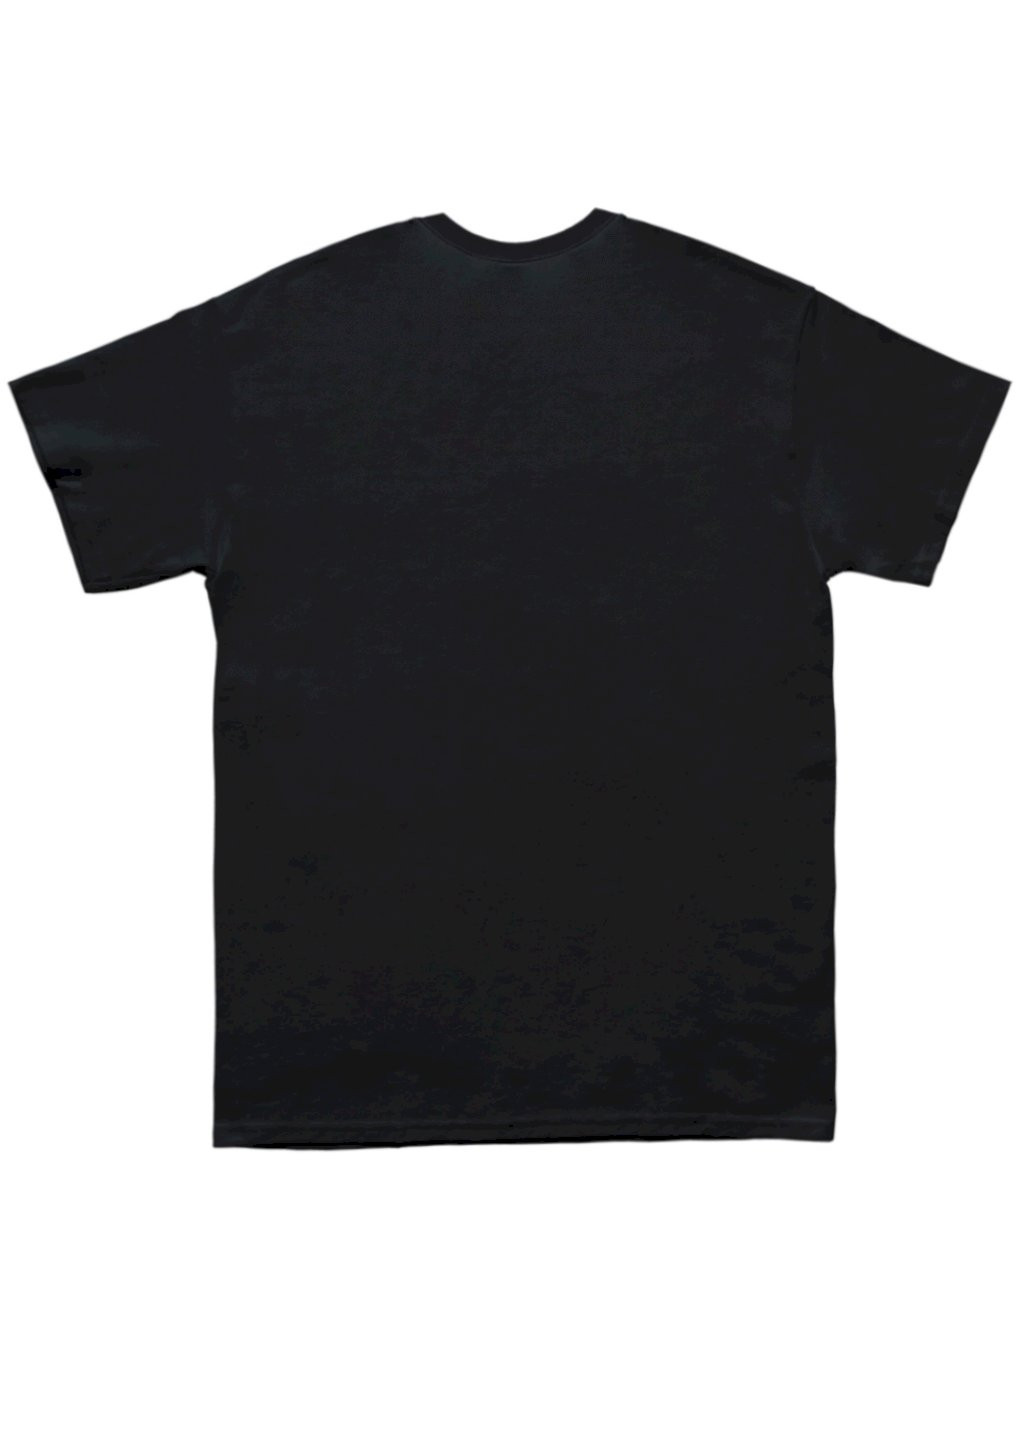 Черная футболка мужская черная "orion" Trace of Space